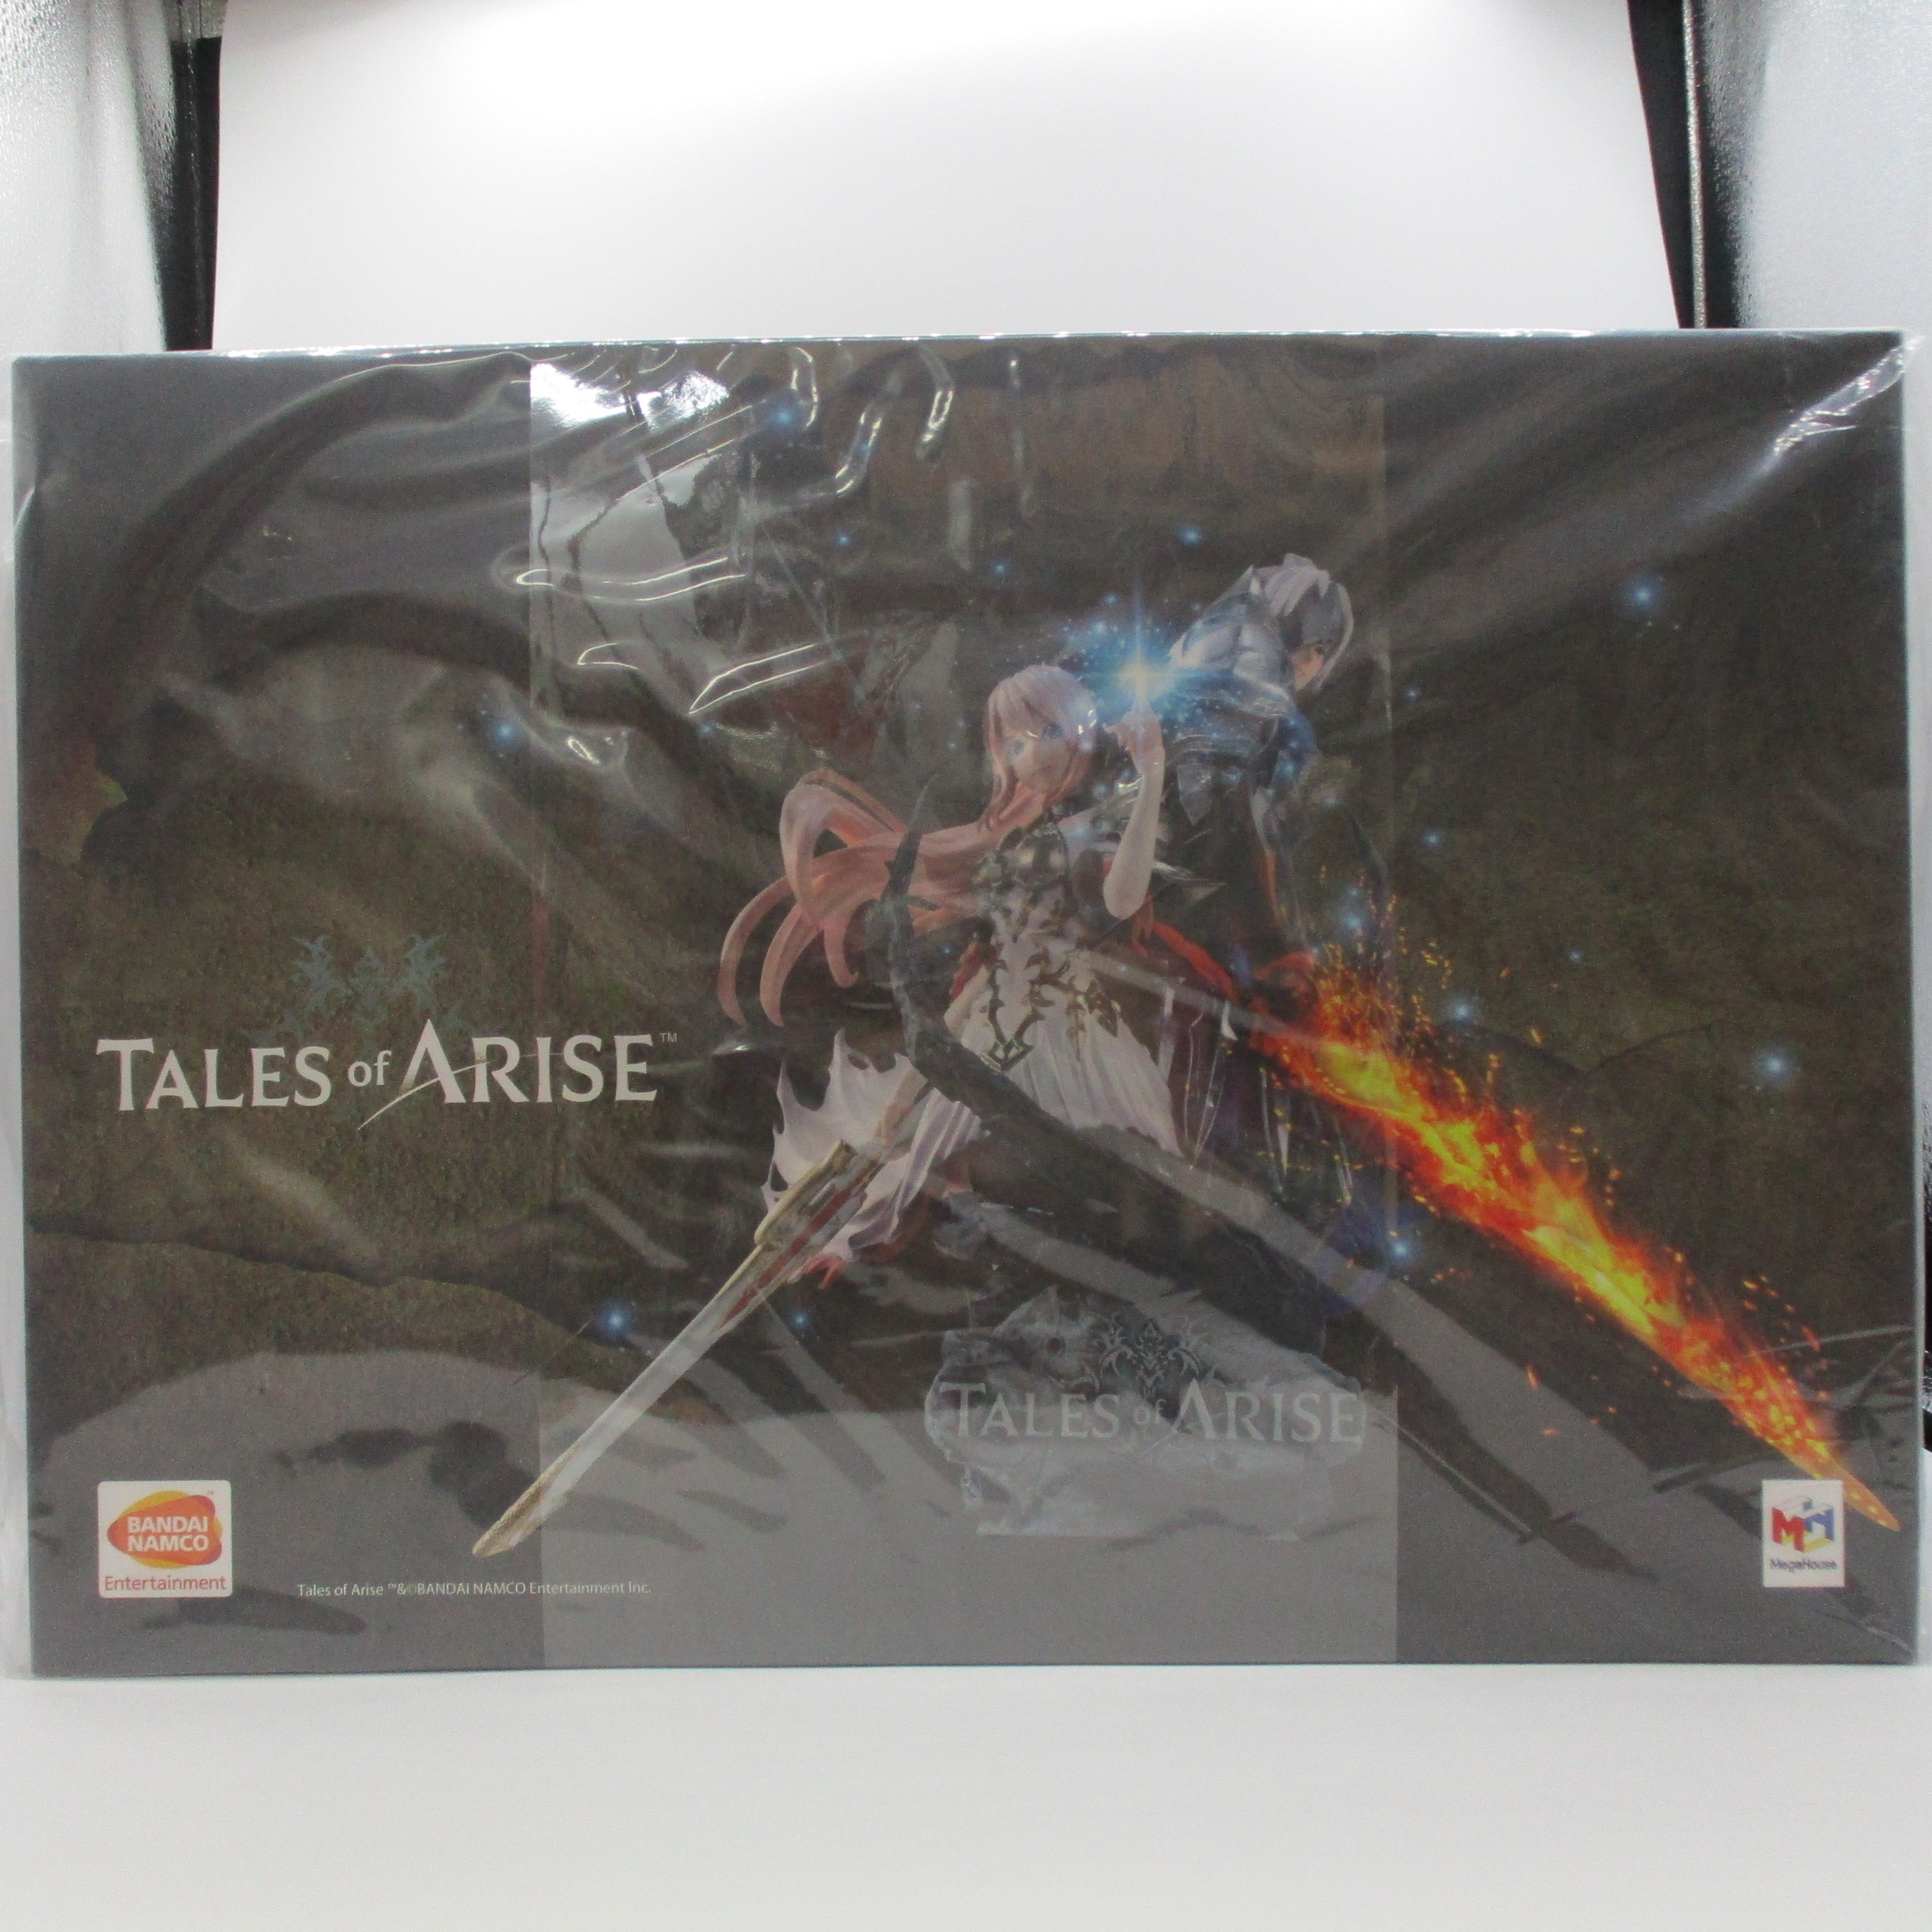 Tales of ARISE アソビストアコレクターズエディション スタチューフィギュア アルフェン&シオン